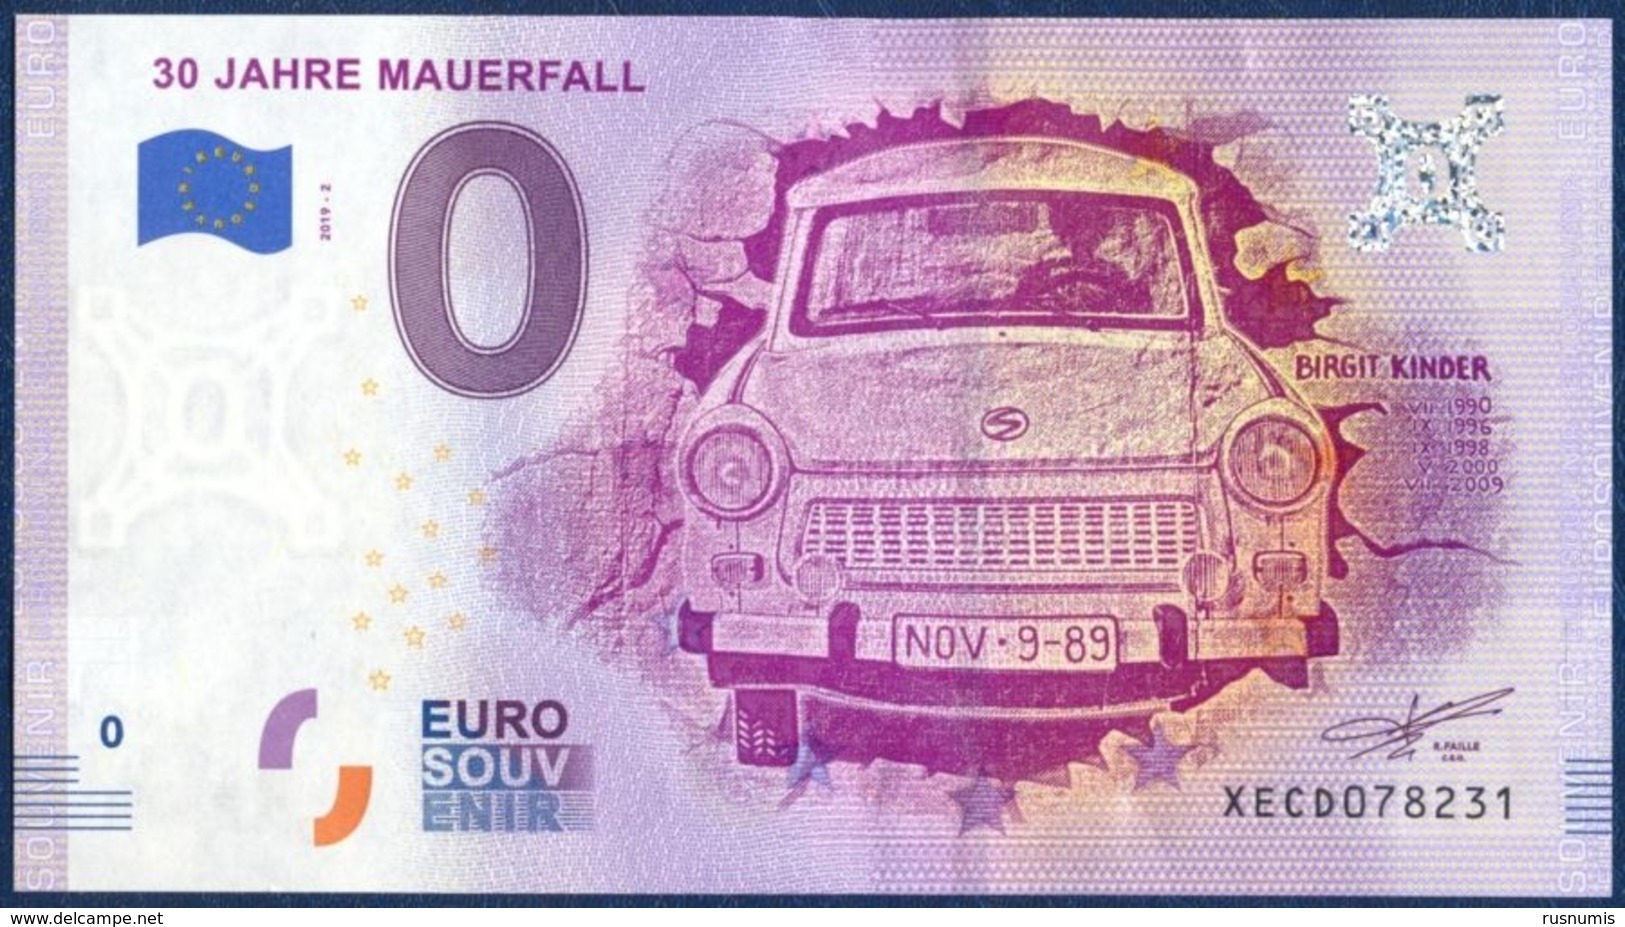 ZERO 0 EURO SOUVENIR 30th ANNIVERSARY FALL OF BERLIN WALL MAUERFALL GERMANY 2019 UNC - Privatentwürfe